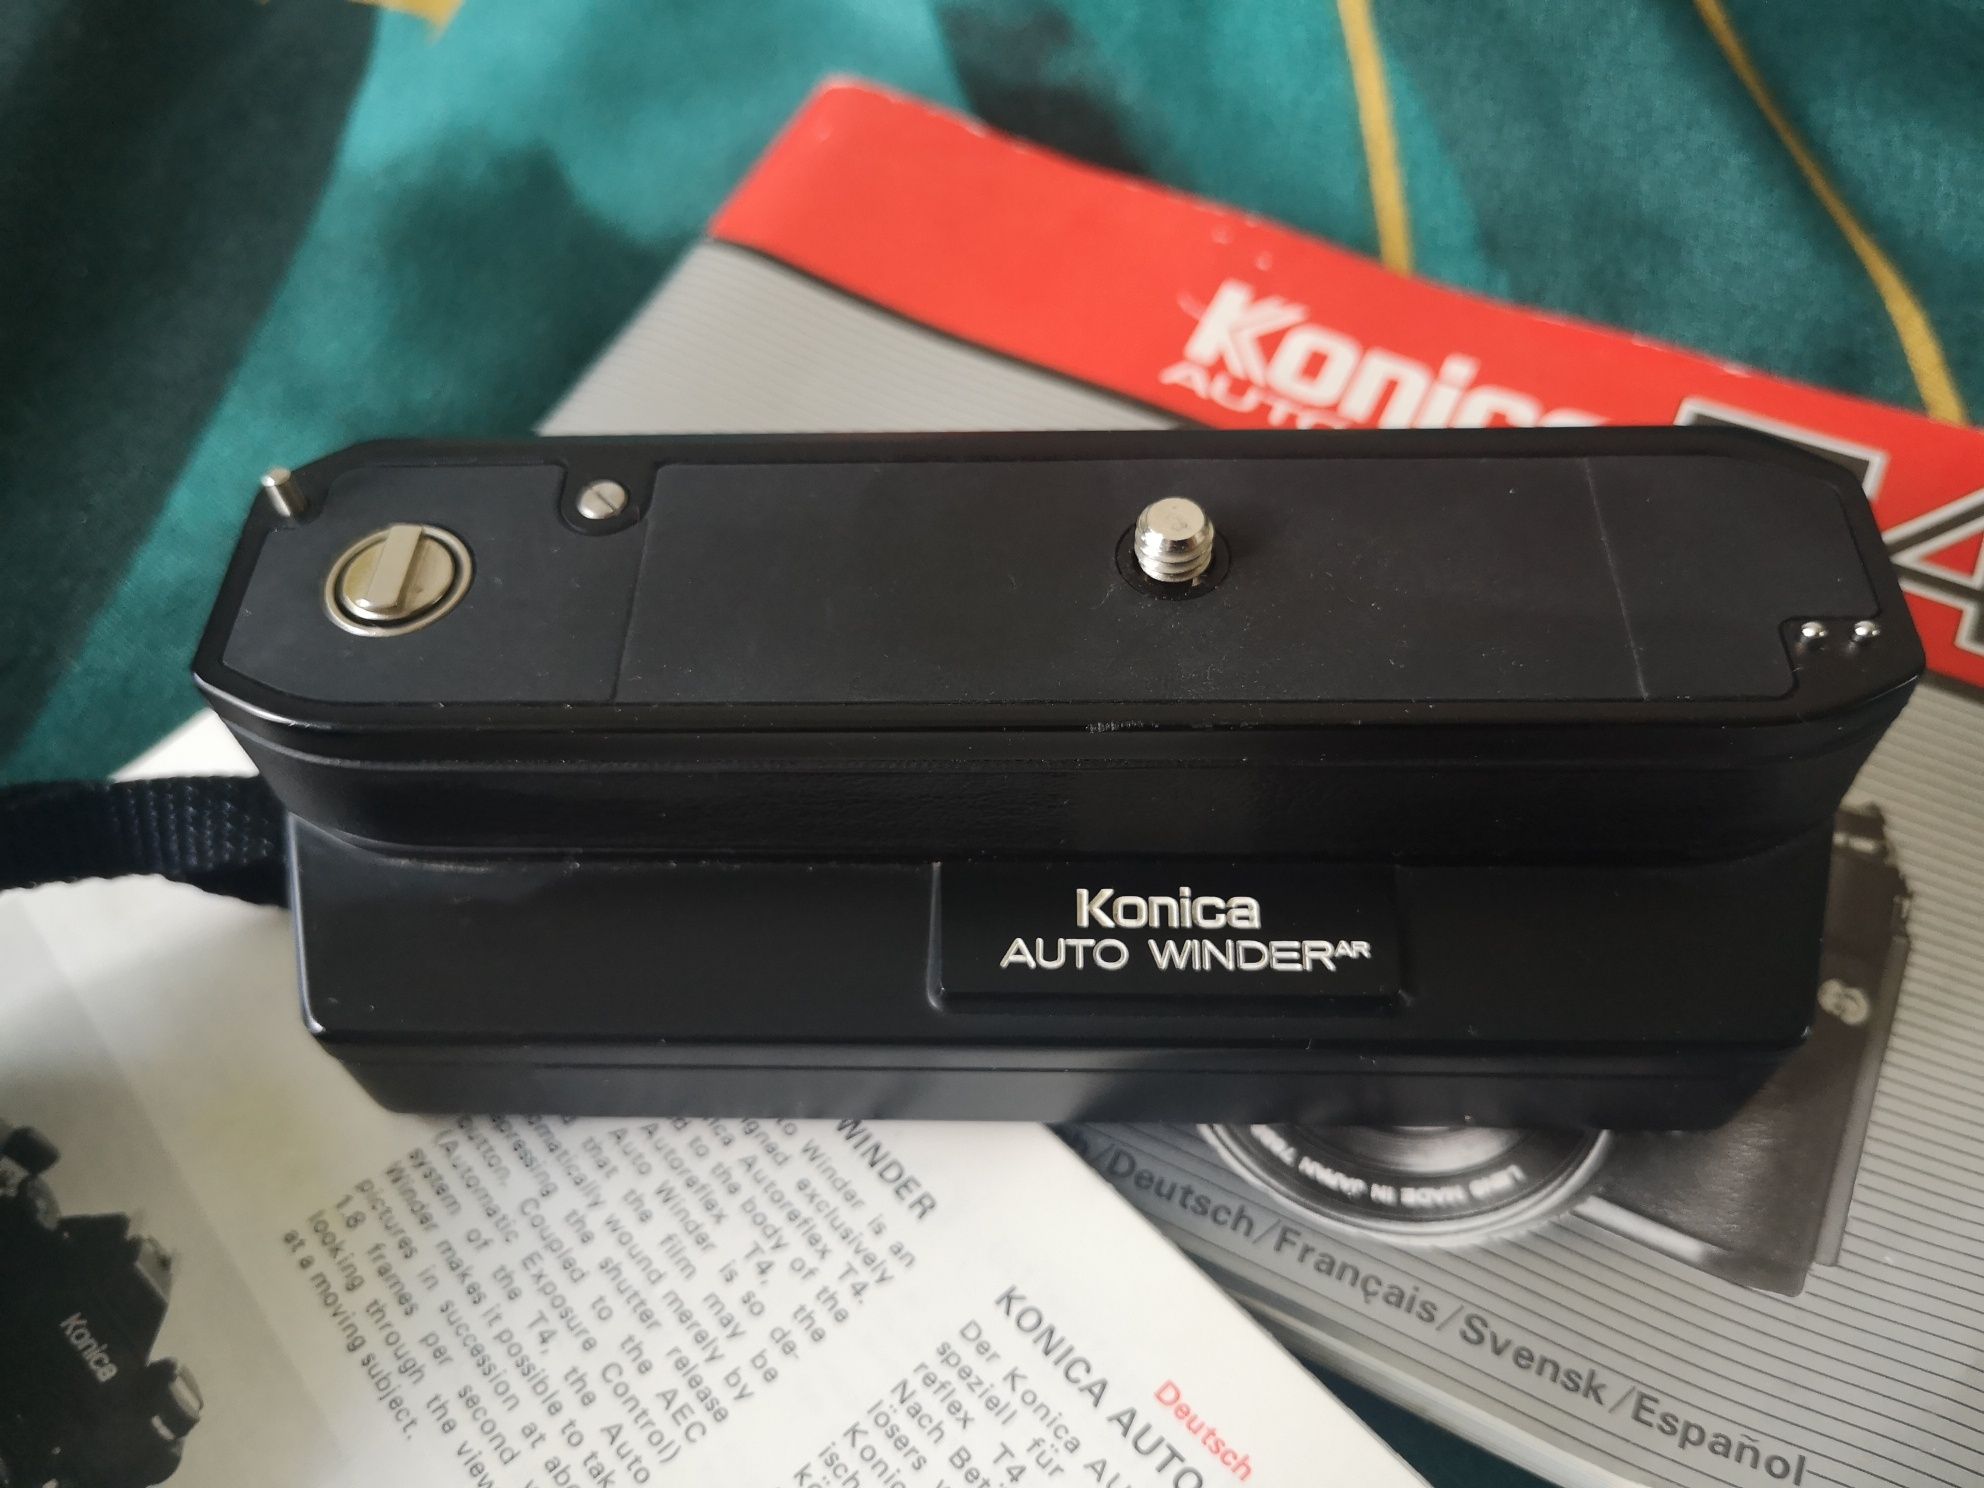 Konica T4 autoreflex - Konica Auto Winder -Konica analog